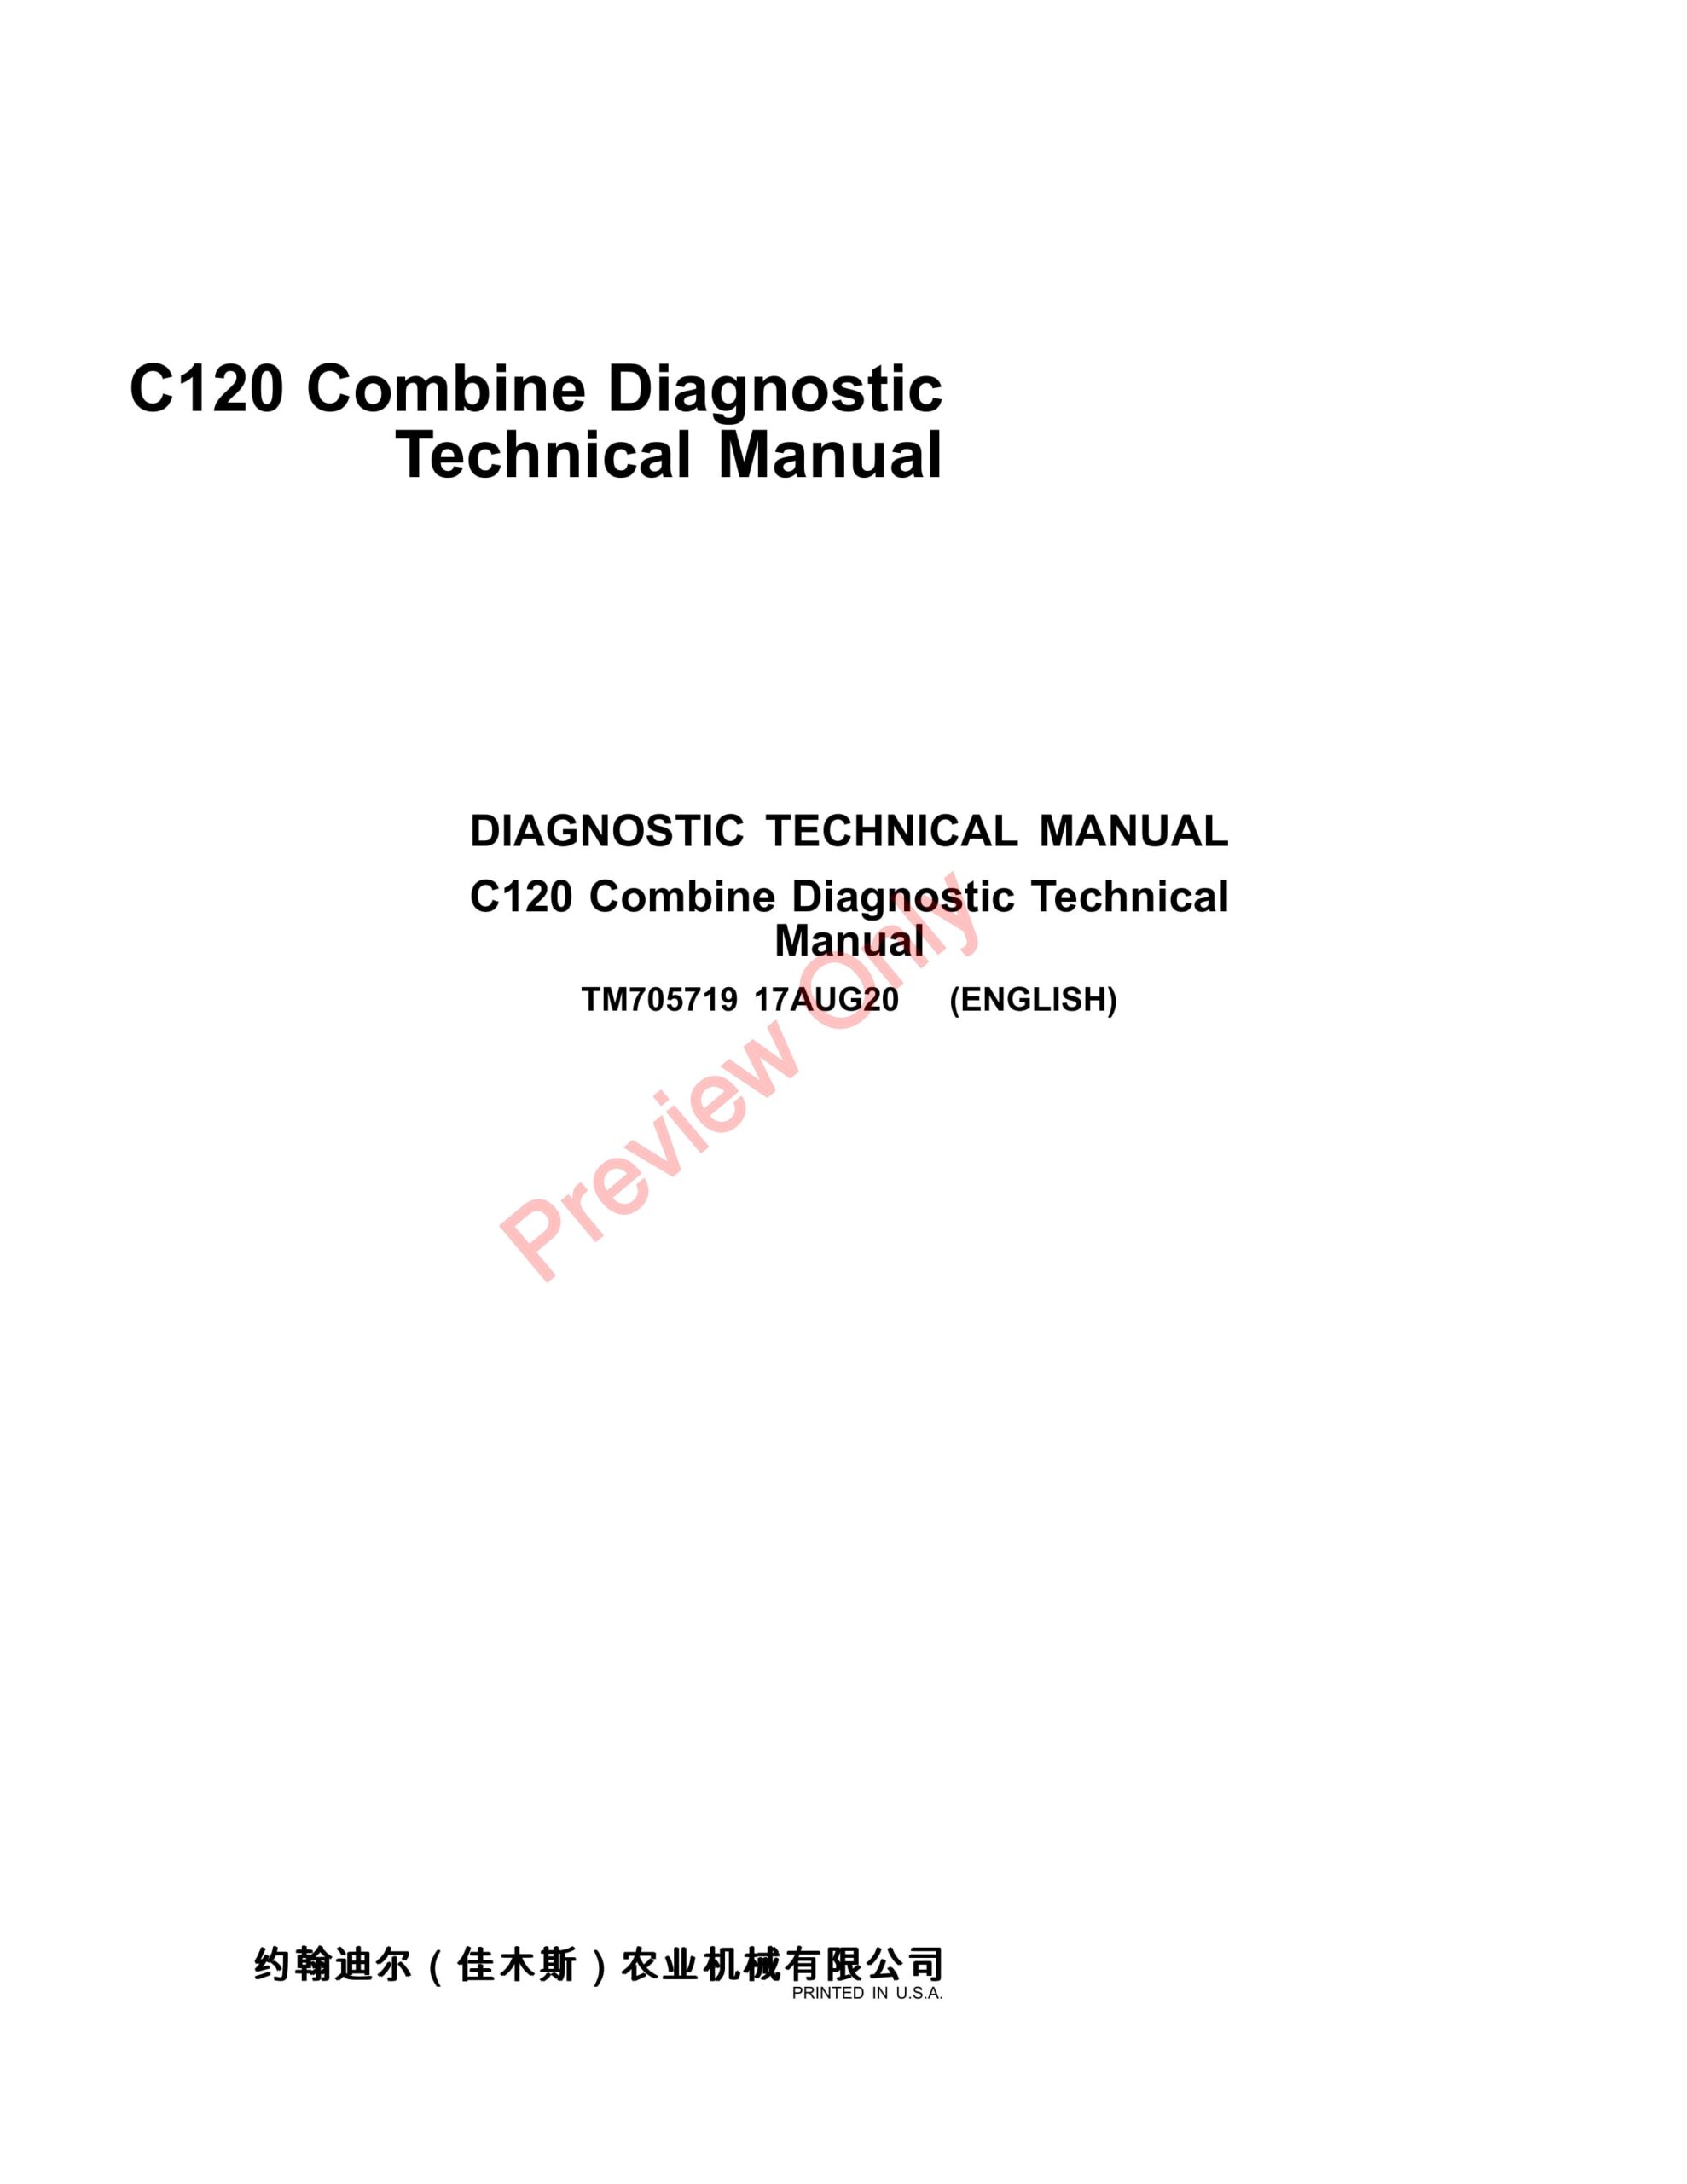 John Deere C120 Combine (020000-) Diagnostic Technical Manual TM705719 17AUG20-1